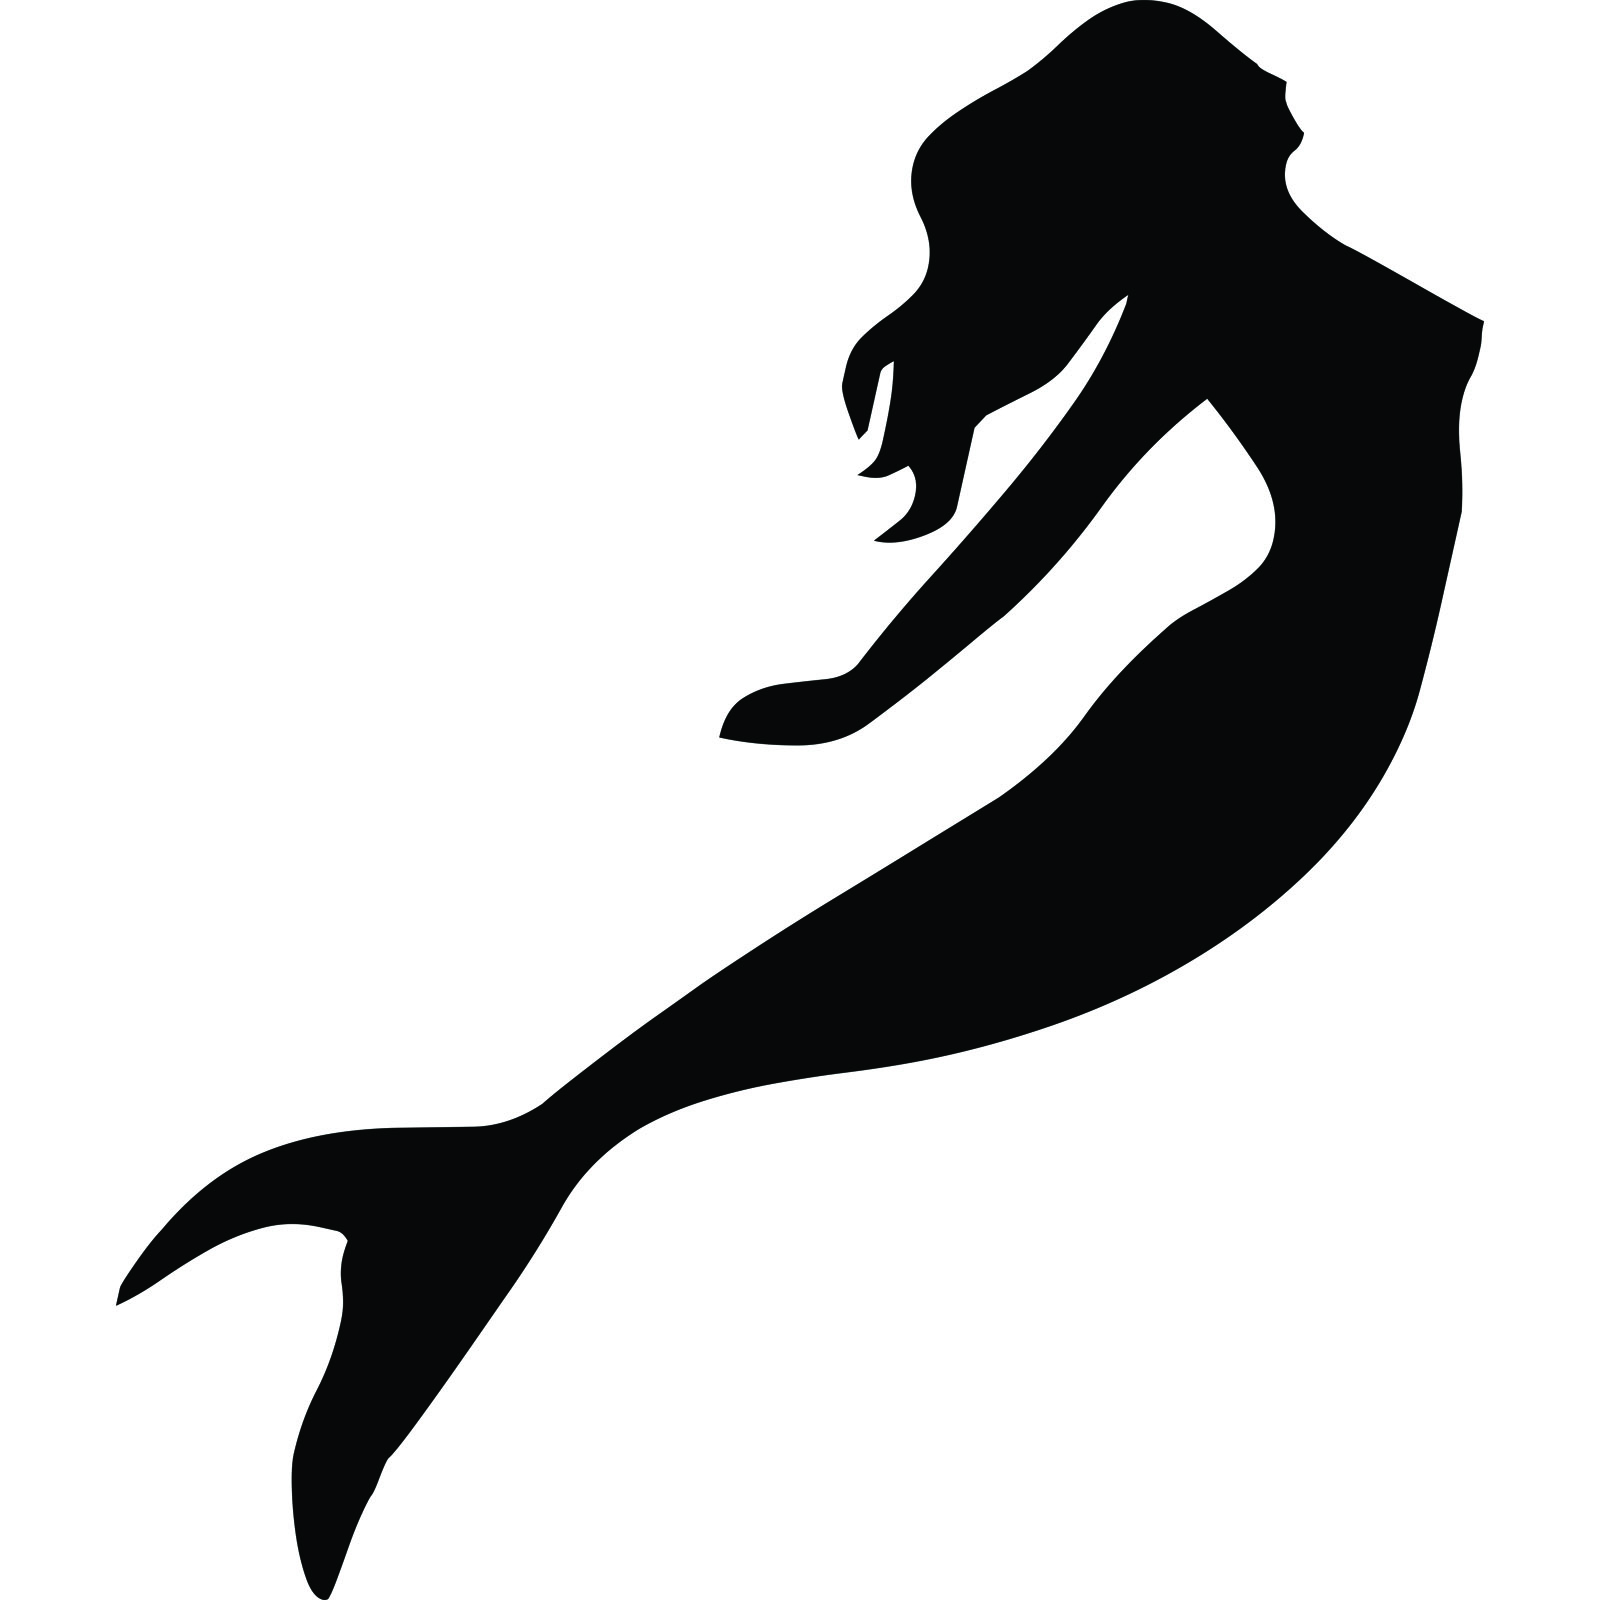 Black Mermaid Silhouette | Clipart Panda - Free Clipart Images